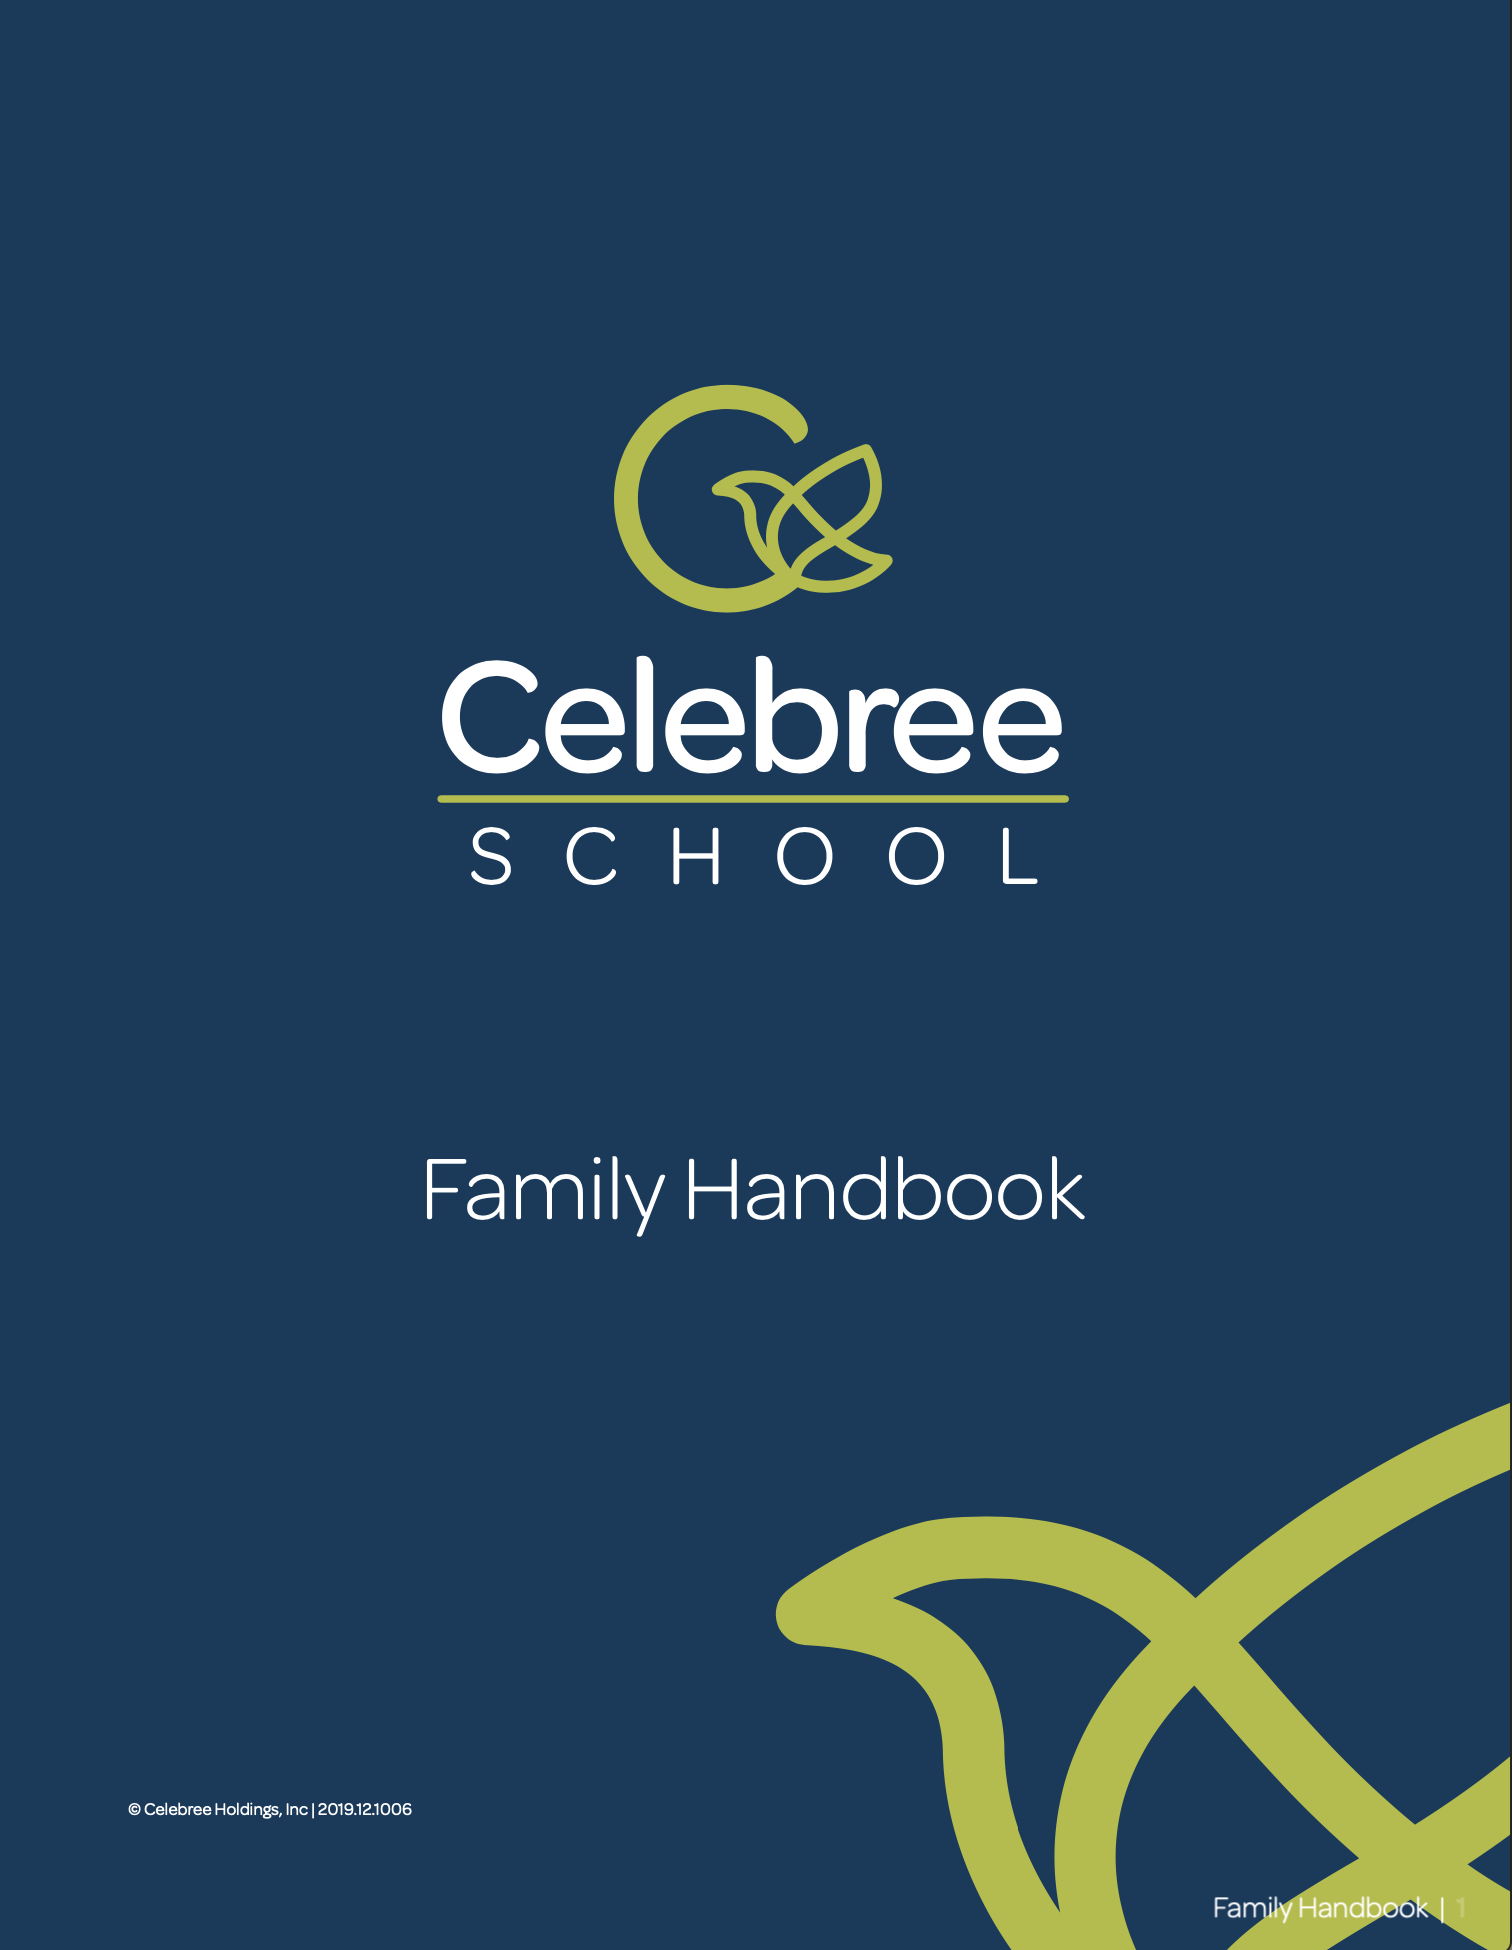 The Parent & Family Handbook